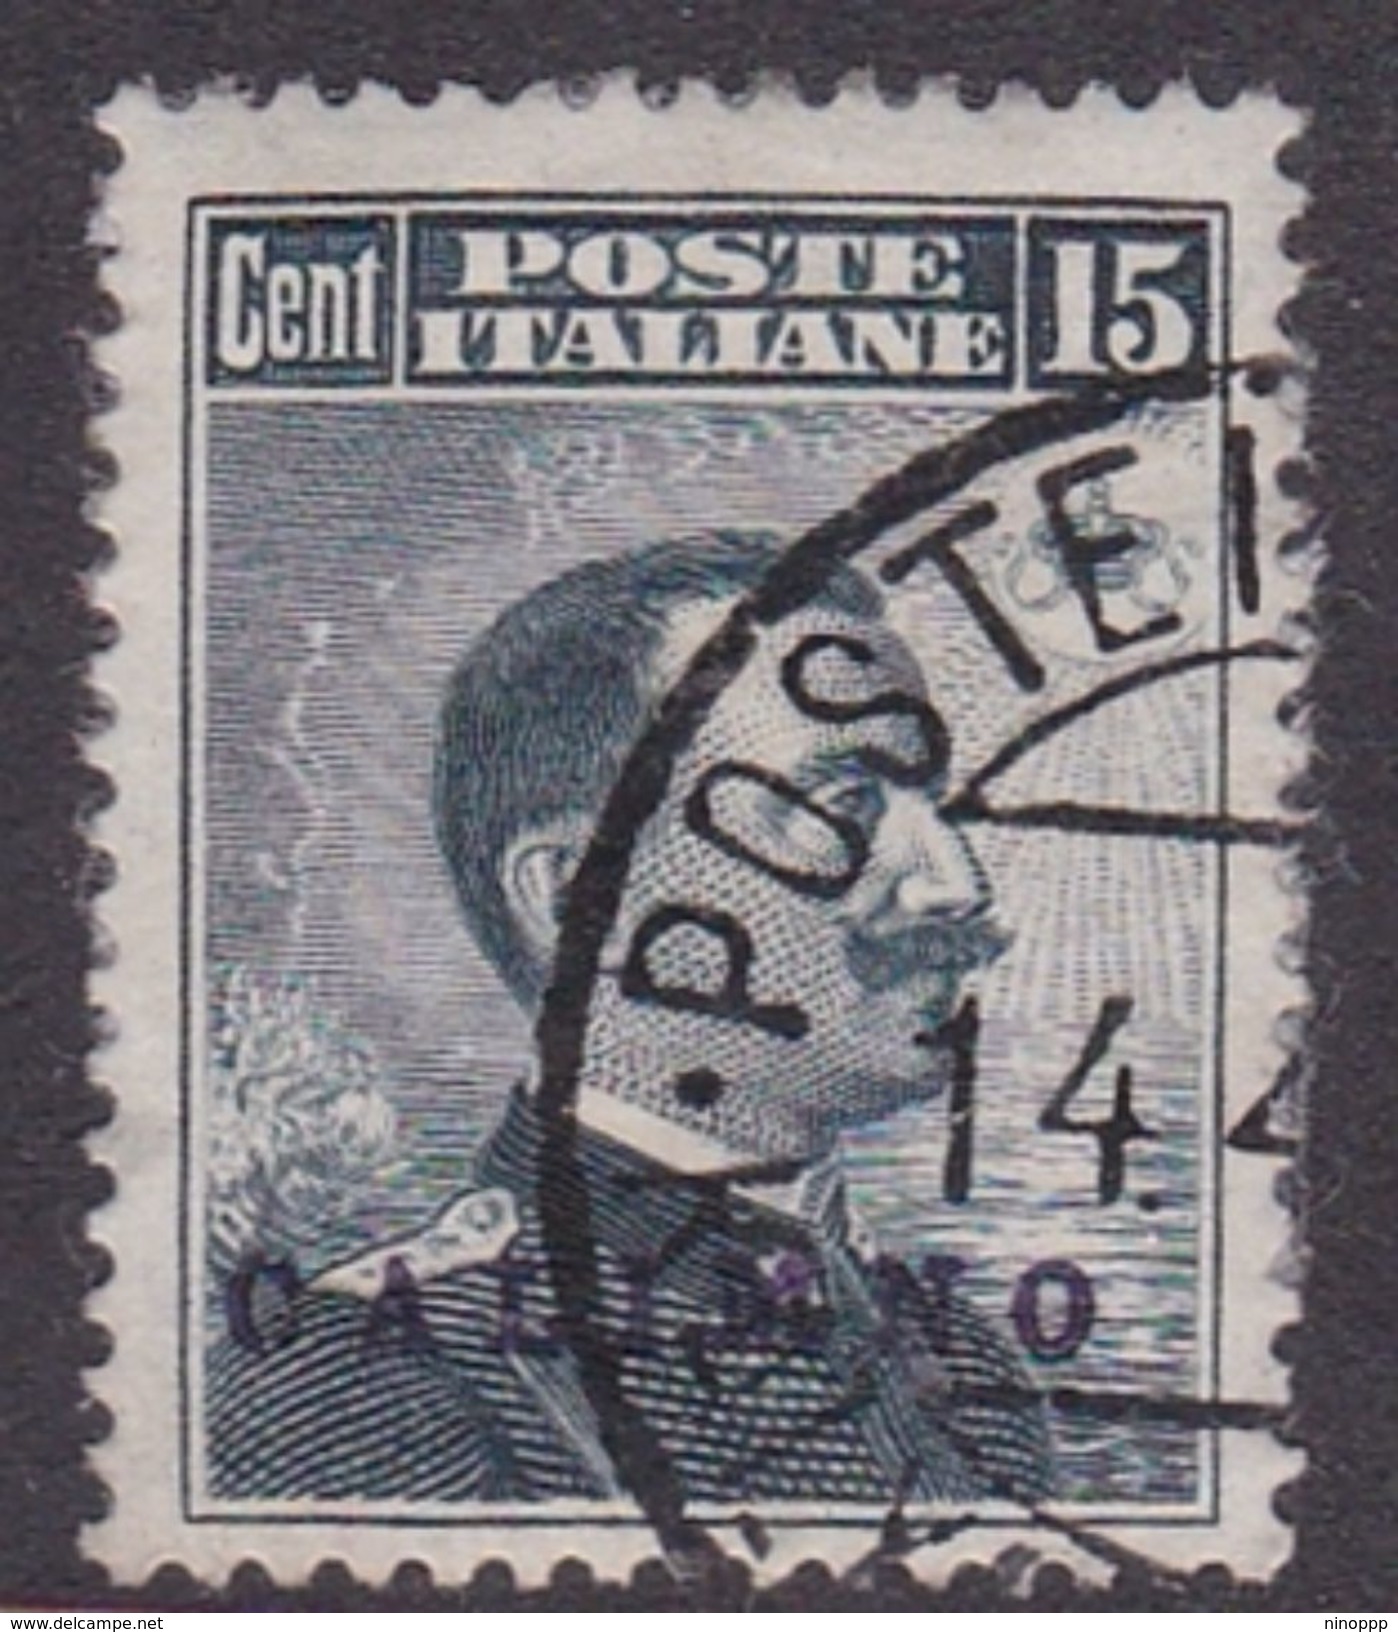 Italy-Colonies And Territories-Aegean-Calino S4  1912 15c Black Gray Used - Egée (Calino)